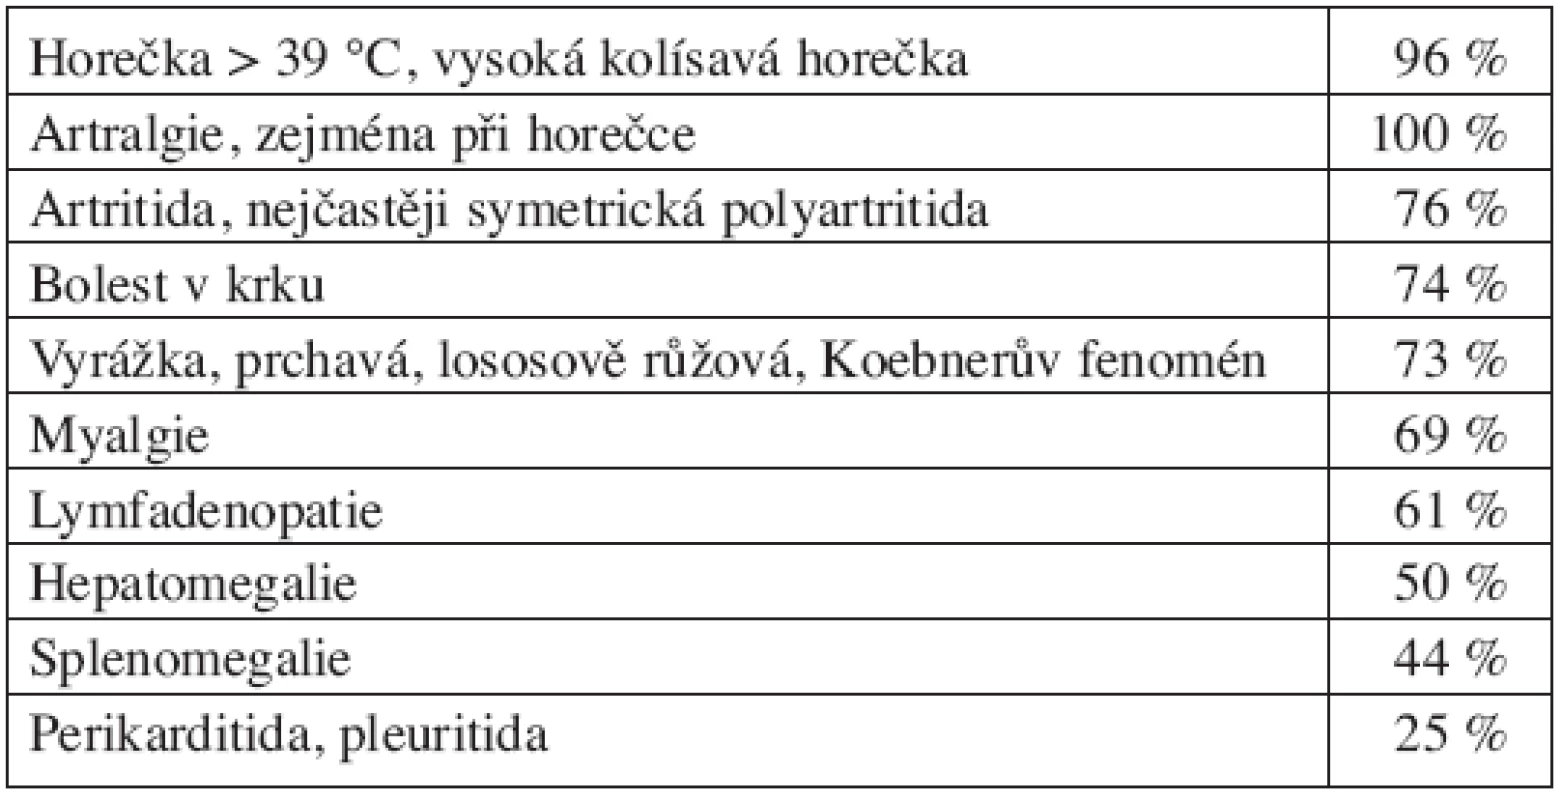 Klinické příznaky Stillovy nemoci dospělých (Efthimiou P, Paik PK, Bielory L. Diagnosis and management of adult onset Still's disease. Ann Rheum Dis 2006; 65:564.)